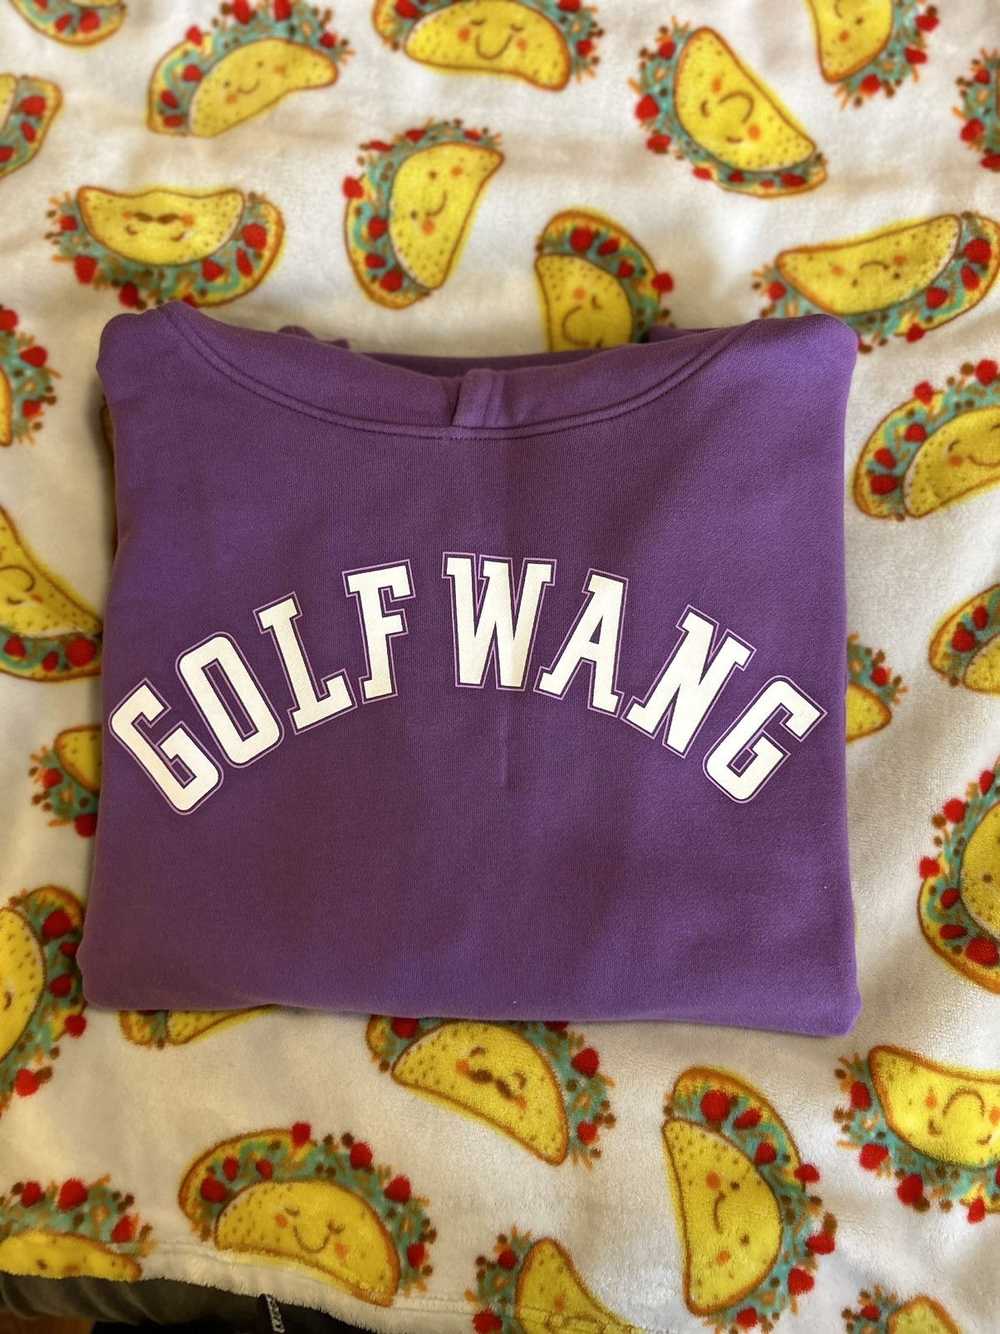 Golf Wang Golfwang Purple Hoodie Large - image 2